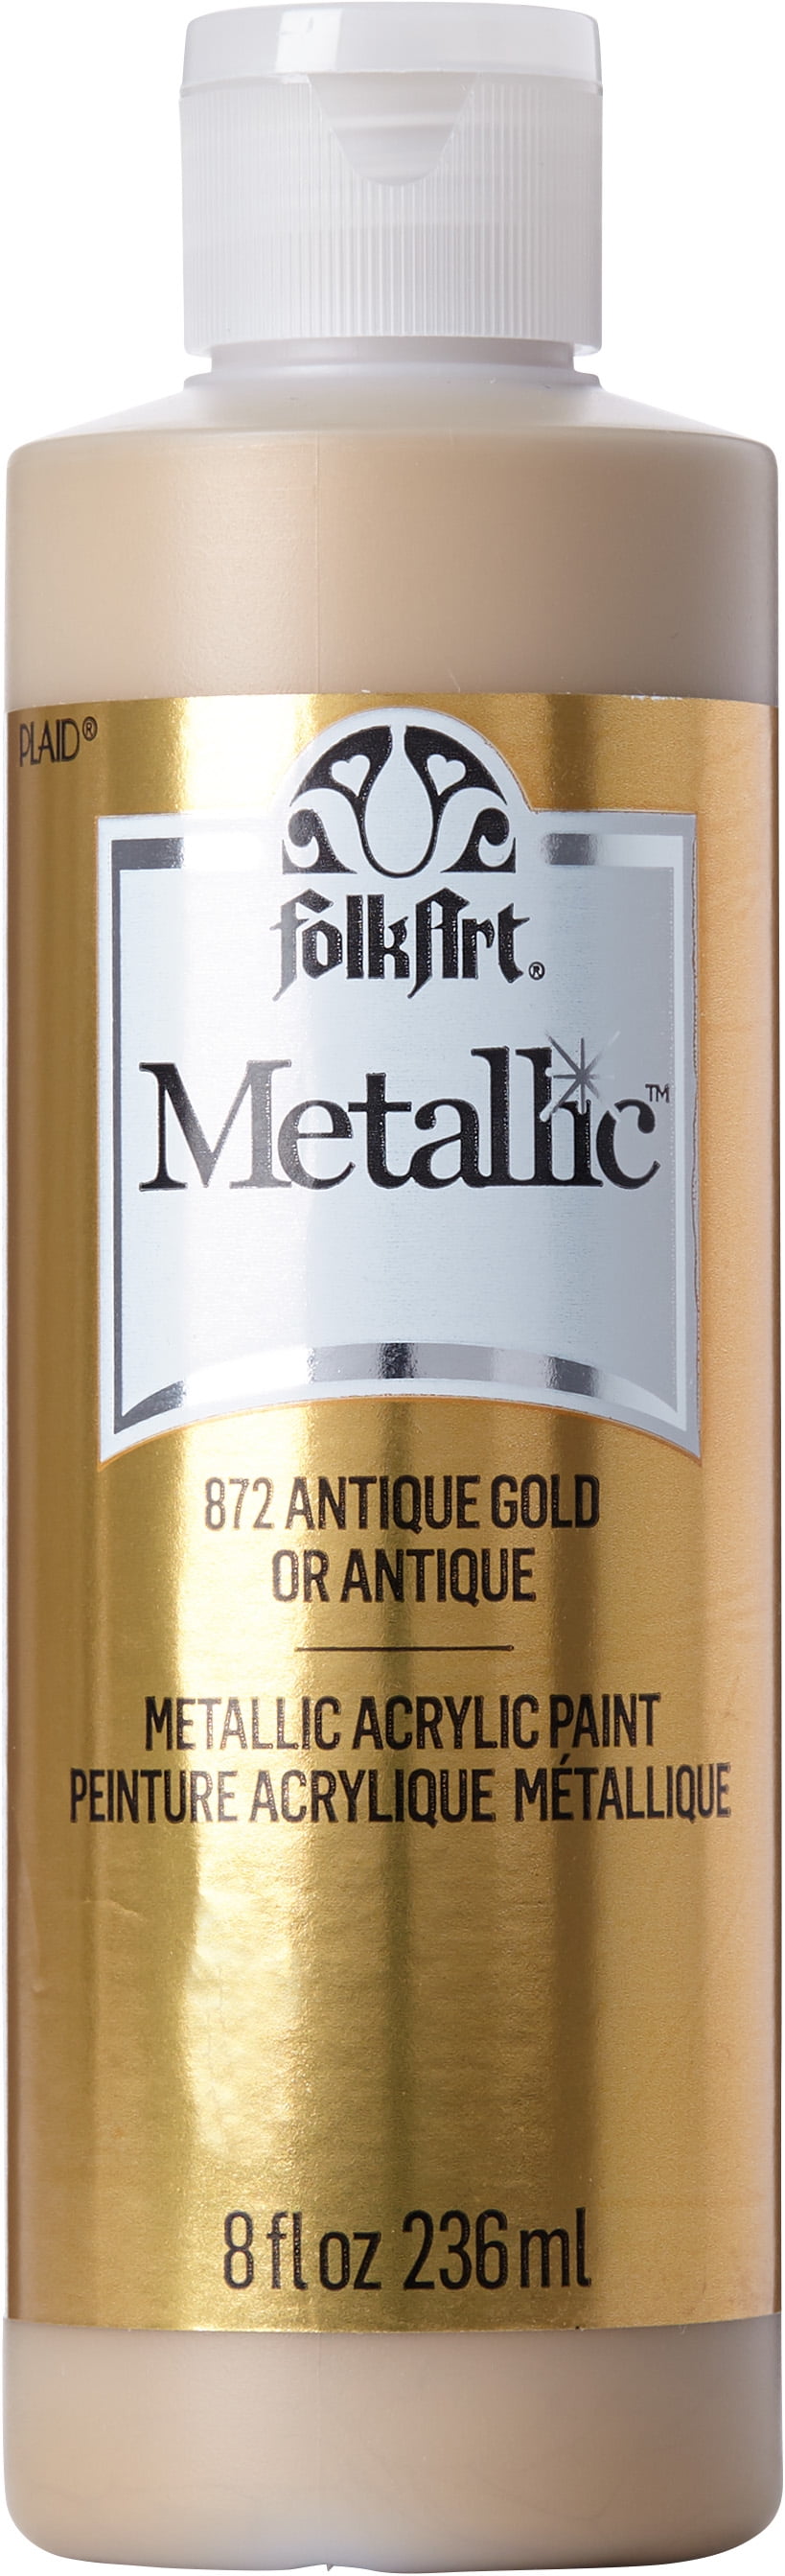 FolkArt Metallic Acrylic Craft Paint, Antique Gold, 8 fl oz